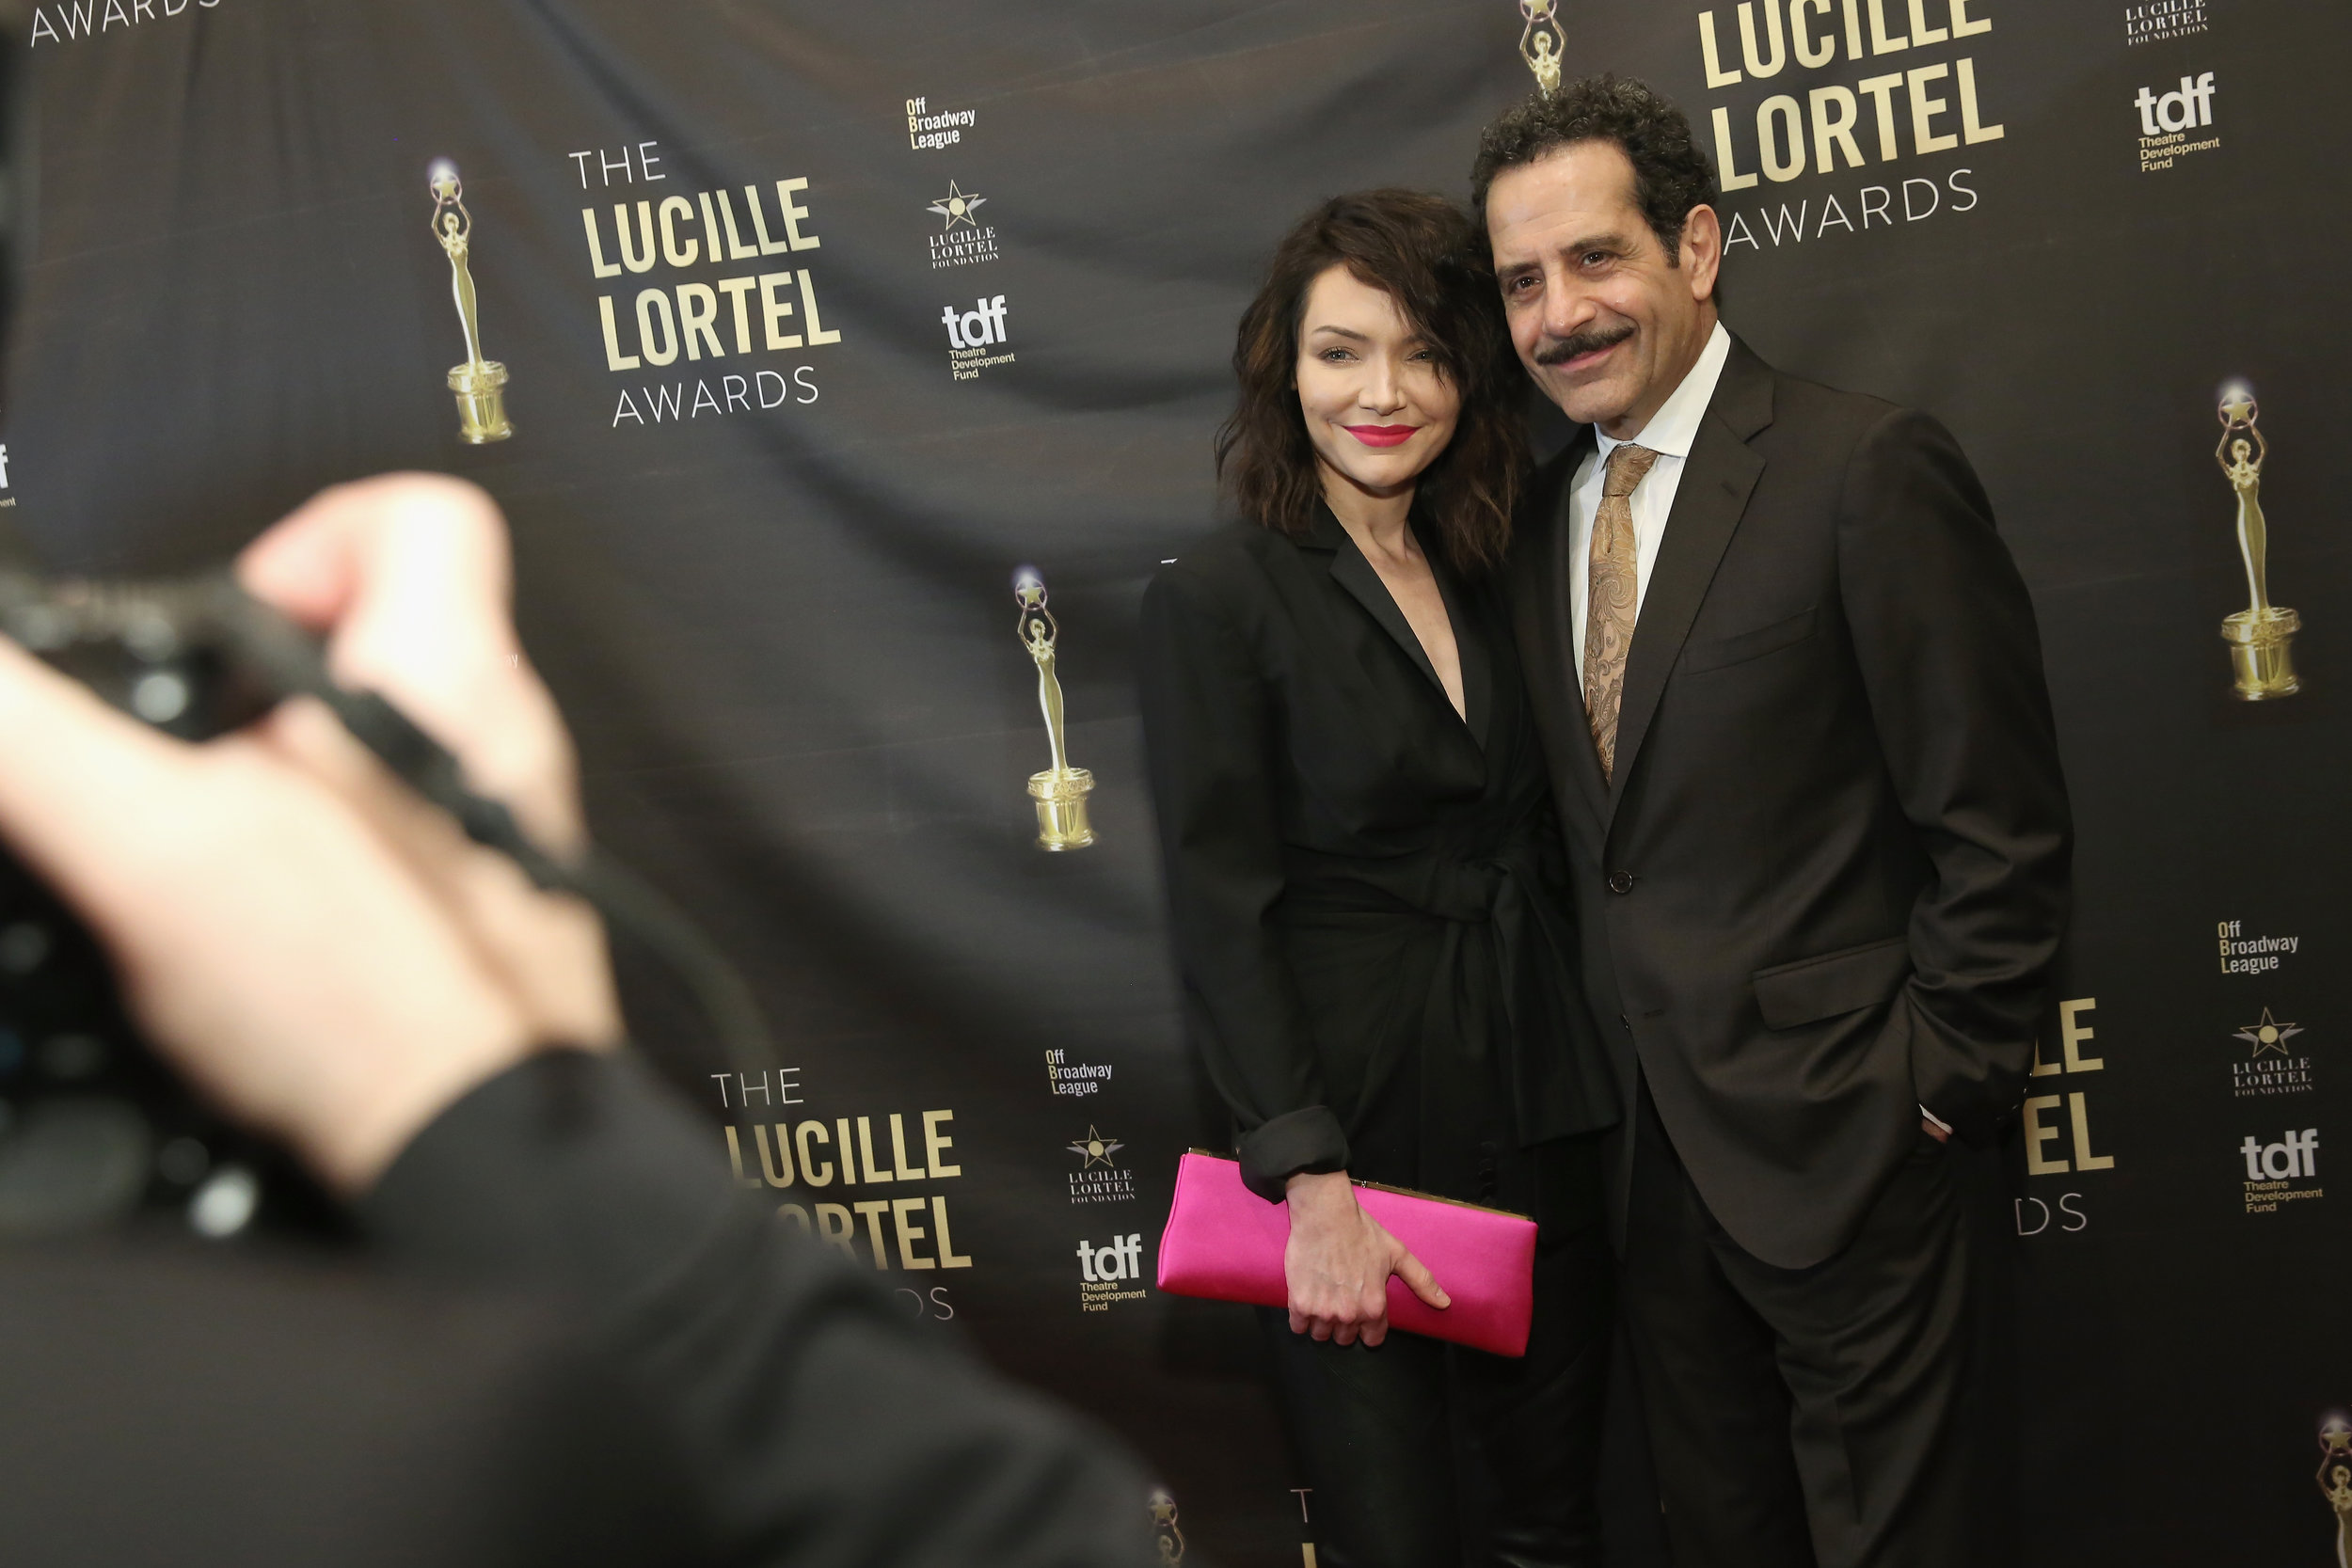 Katrina Lenk and Tony Shalhoub attend the 33rd Annual Lucille Lortel Awards